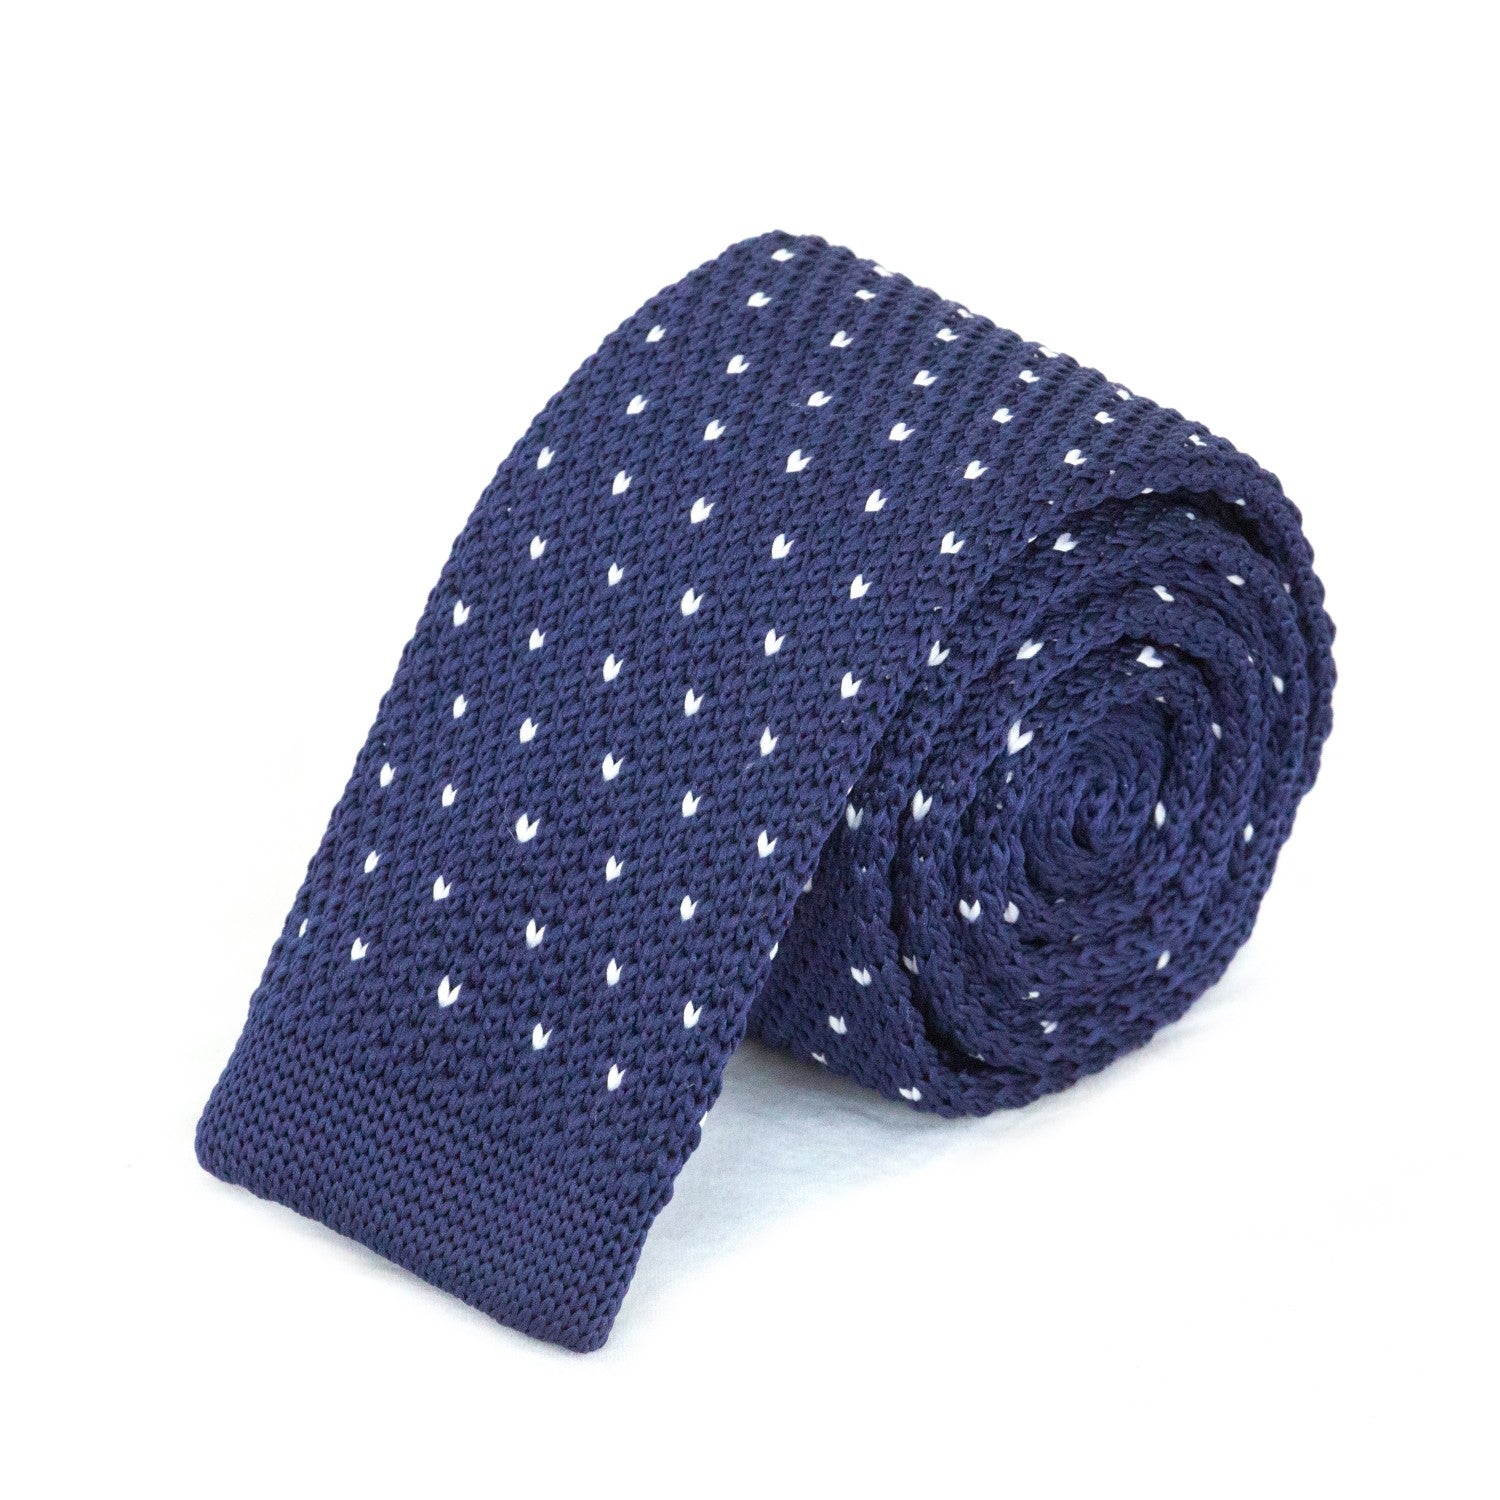 Blue and White Dot Knit Tie, Ties, TI1080, Mens Ties, Cuffed, Clinks, Clinks Australia